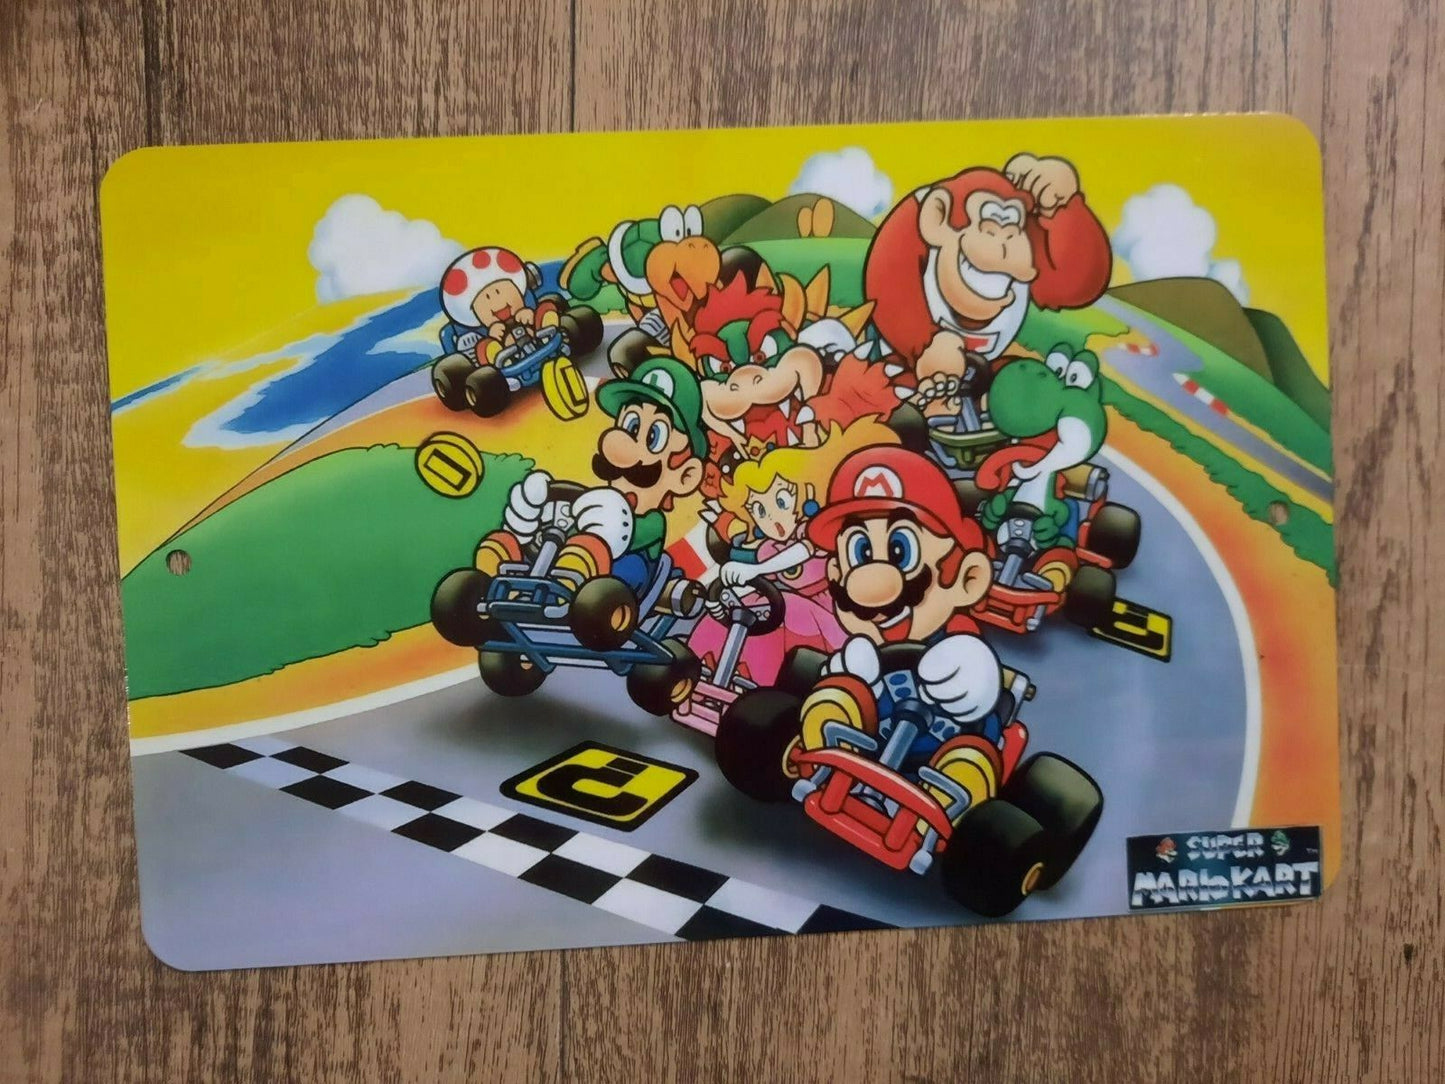 Super Mario Kart 8x12 Metal Wall Sign Classic Video Game Retro 80s